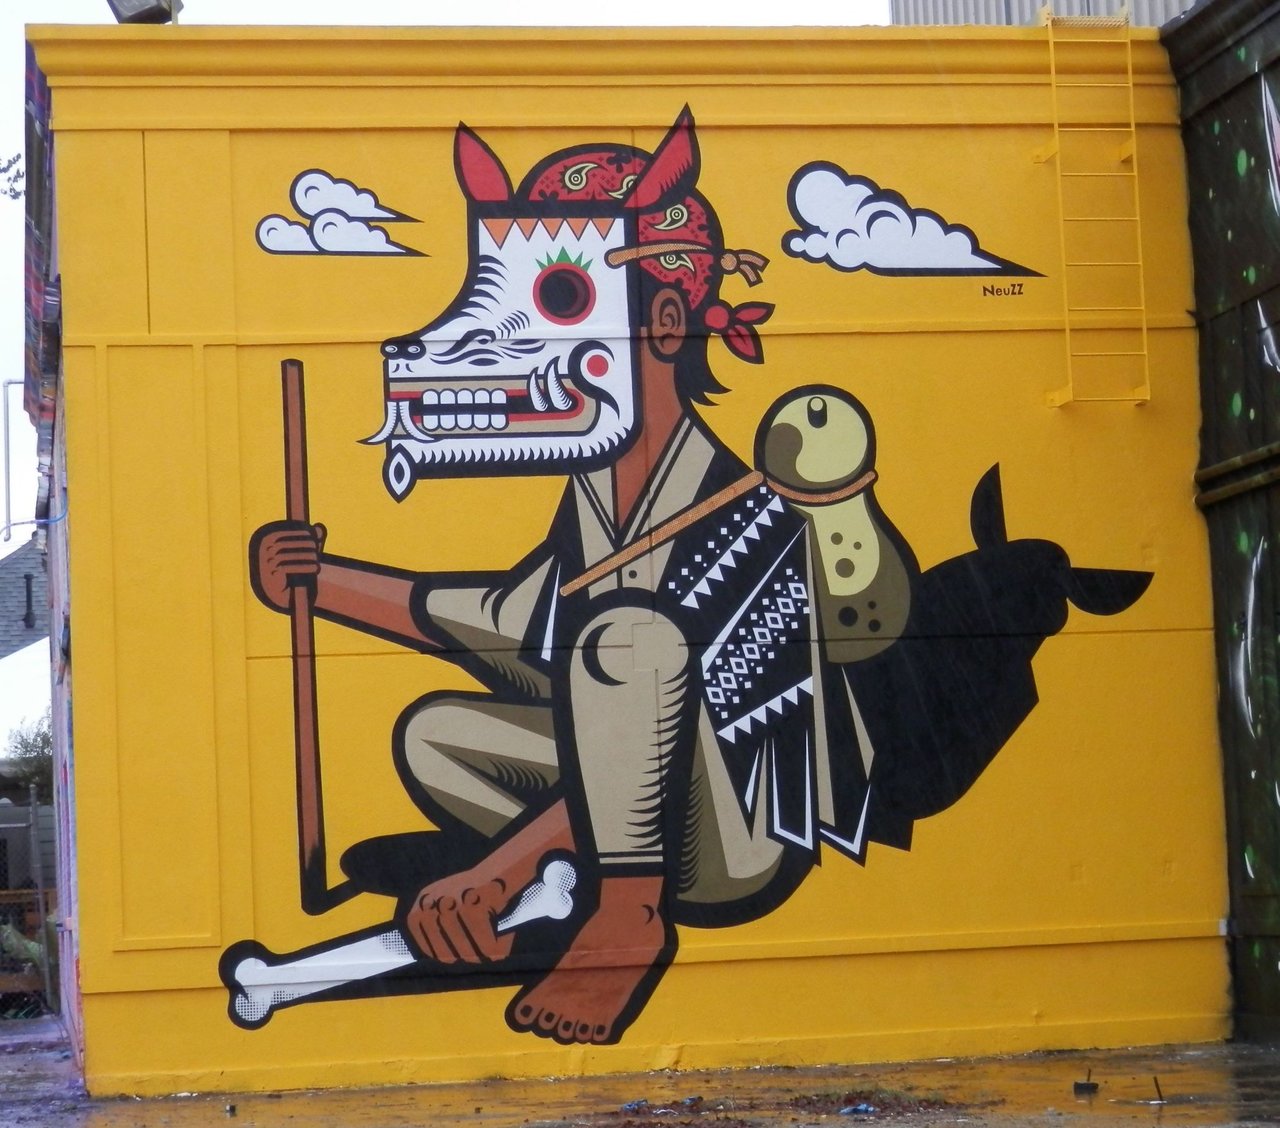 #Houston #Graffiti #HueFestival #Streetart by NeuZZ (aka Miguel Mejia) from Mexico. https://t.co/SLOTNxbNCp